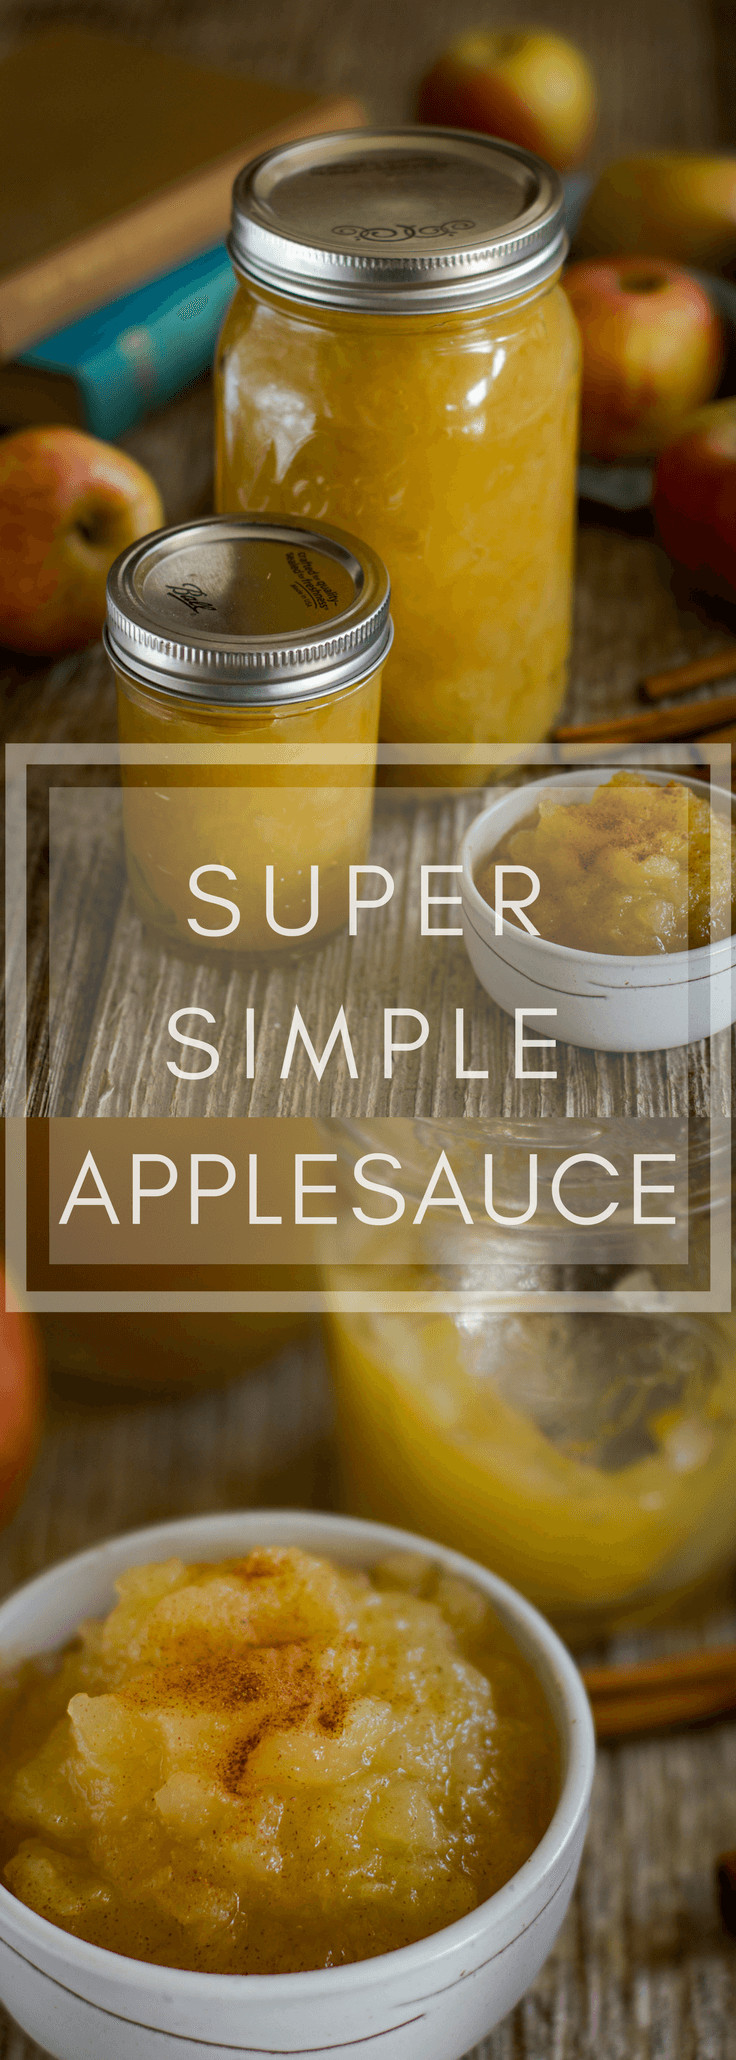 Simple Applesauce Recipe
 Super Simple Applesauce Recipe – MK Library